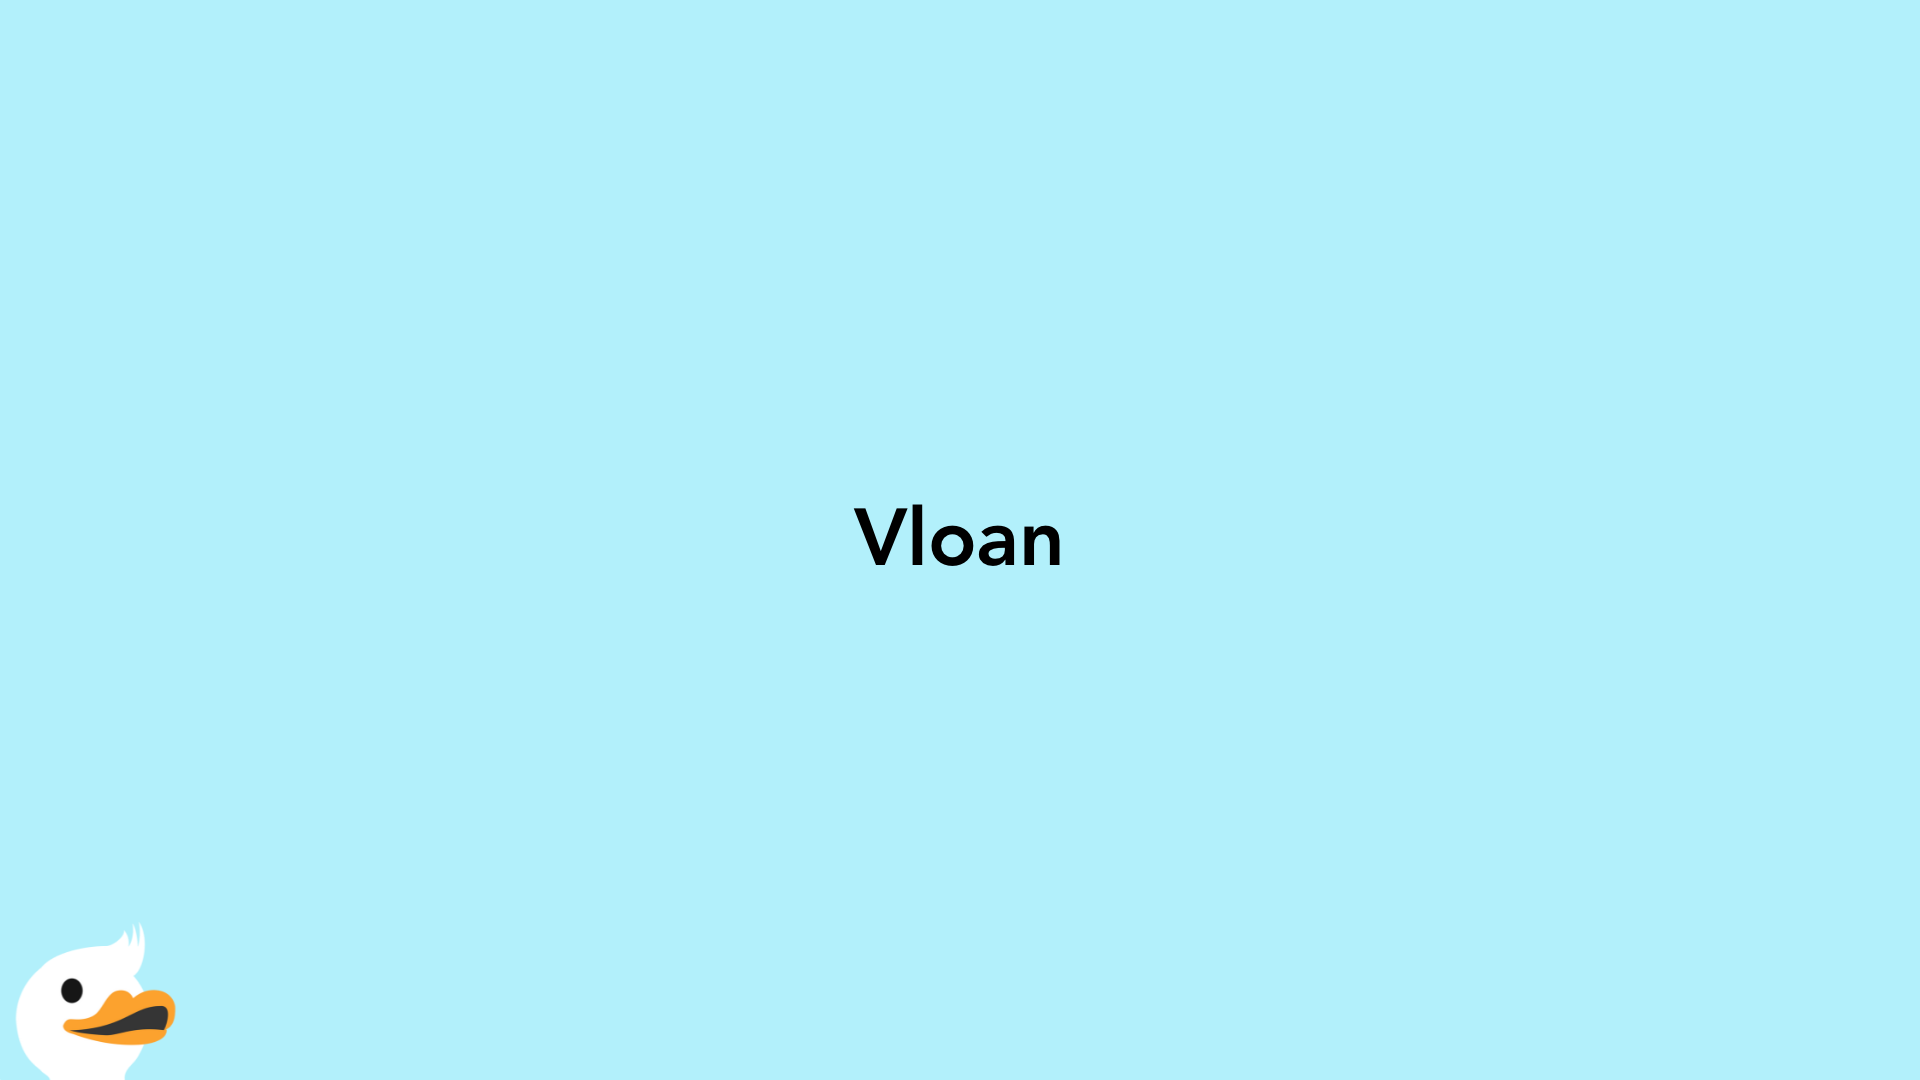 Vloan